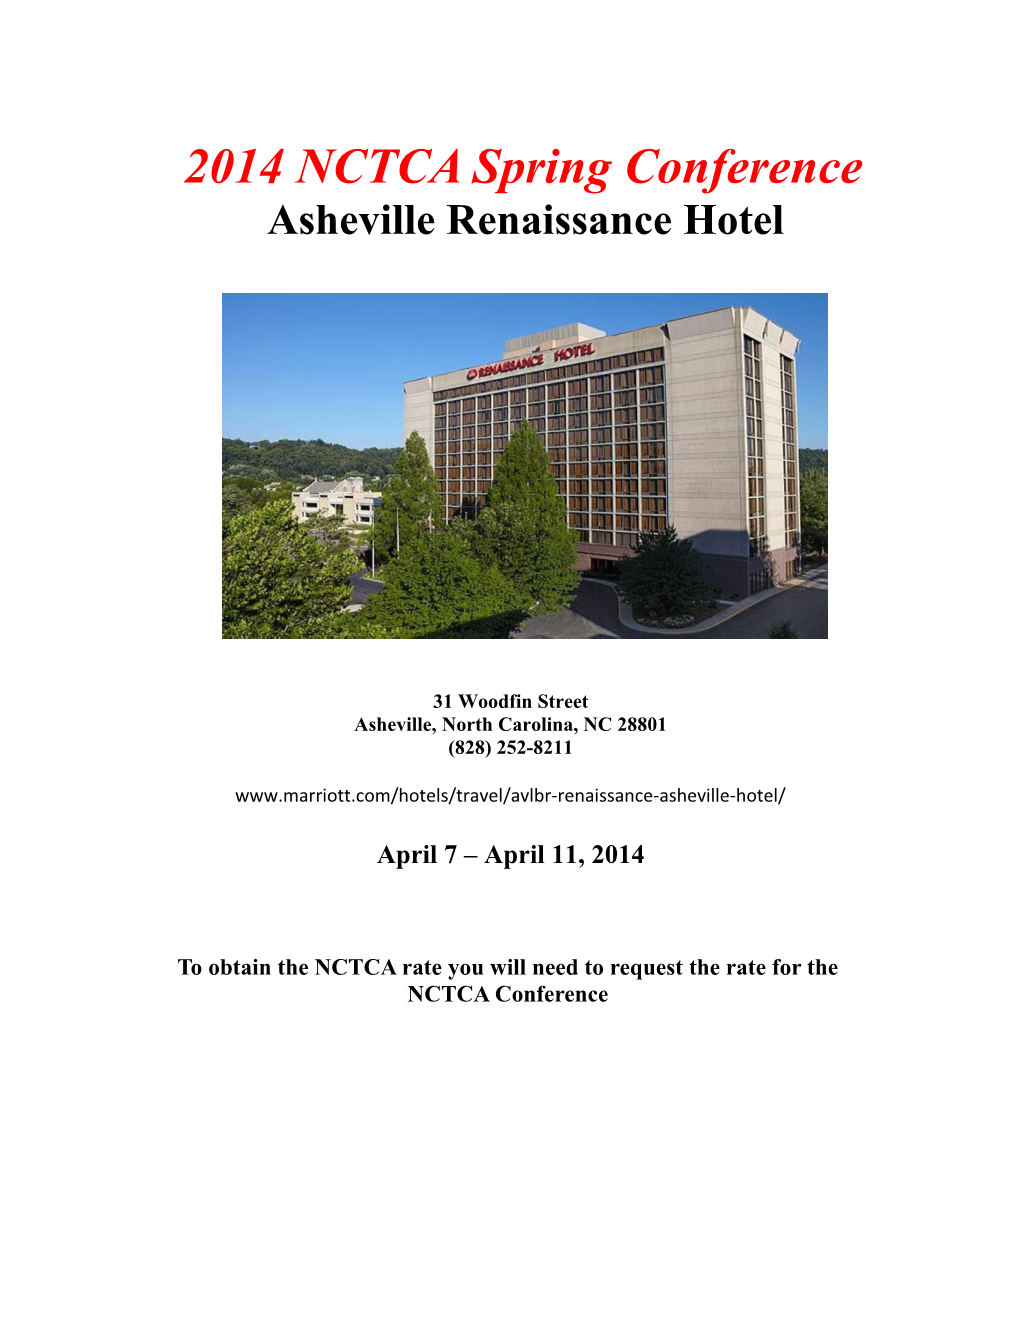 2014 NCTCA Vendor Letter